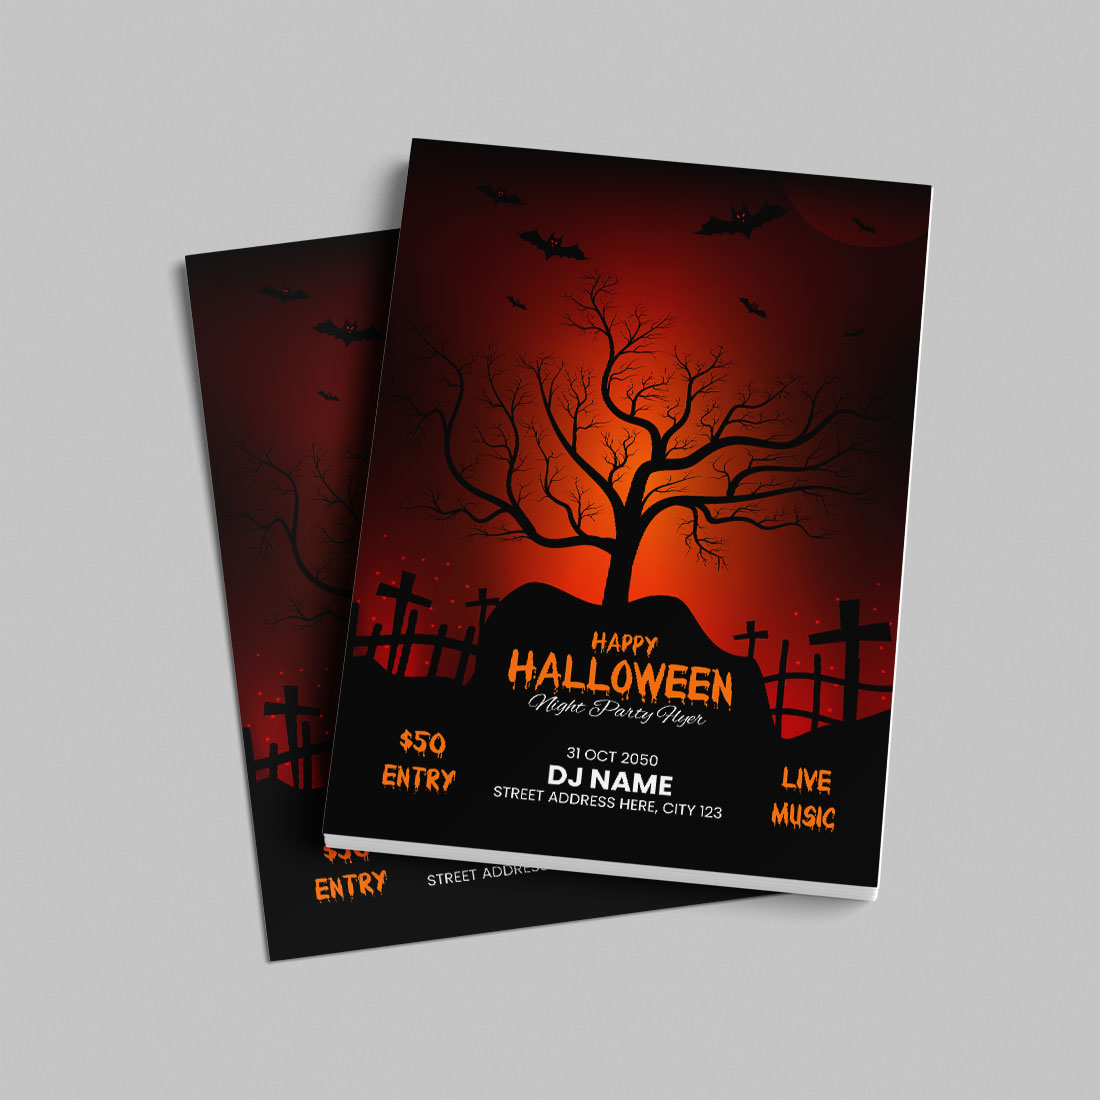 Happy Halloween flyer design template preview image.